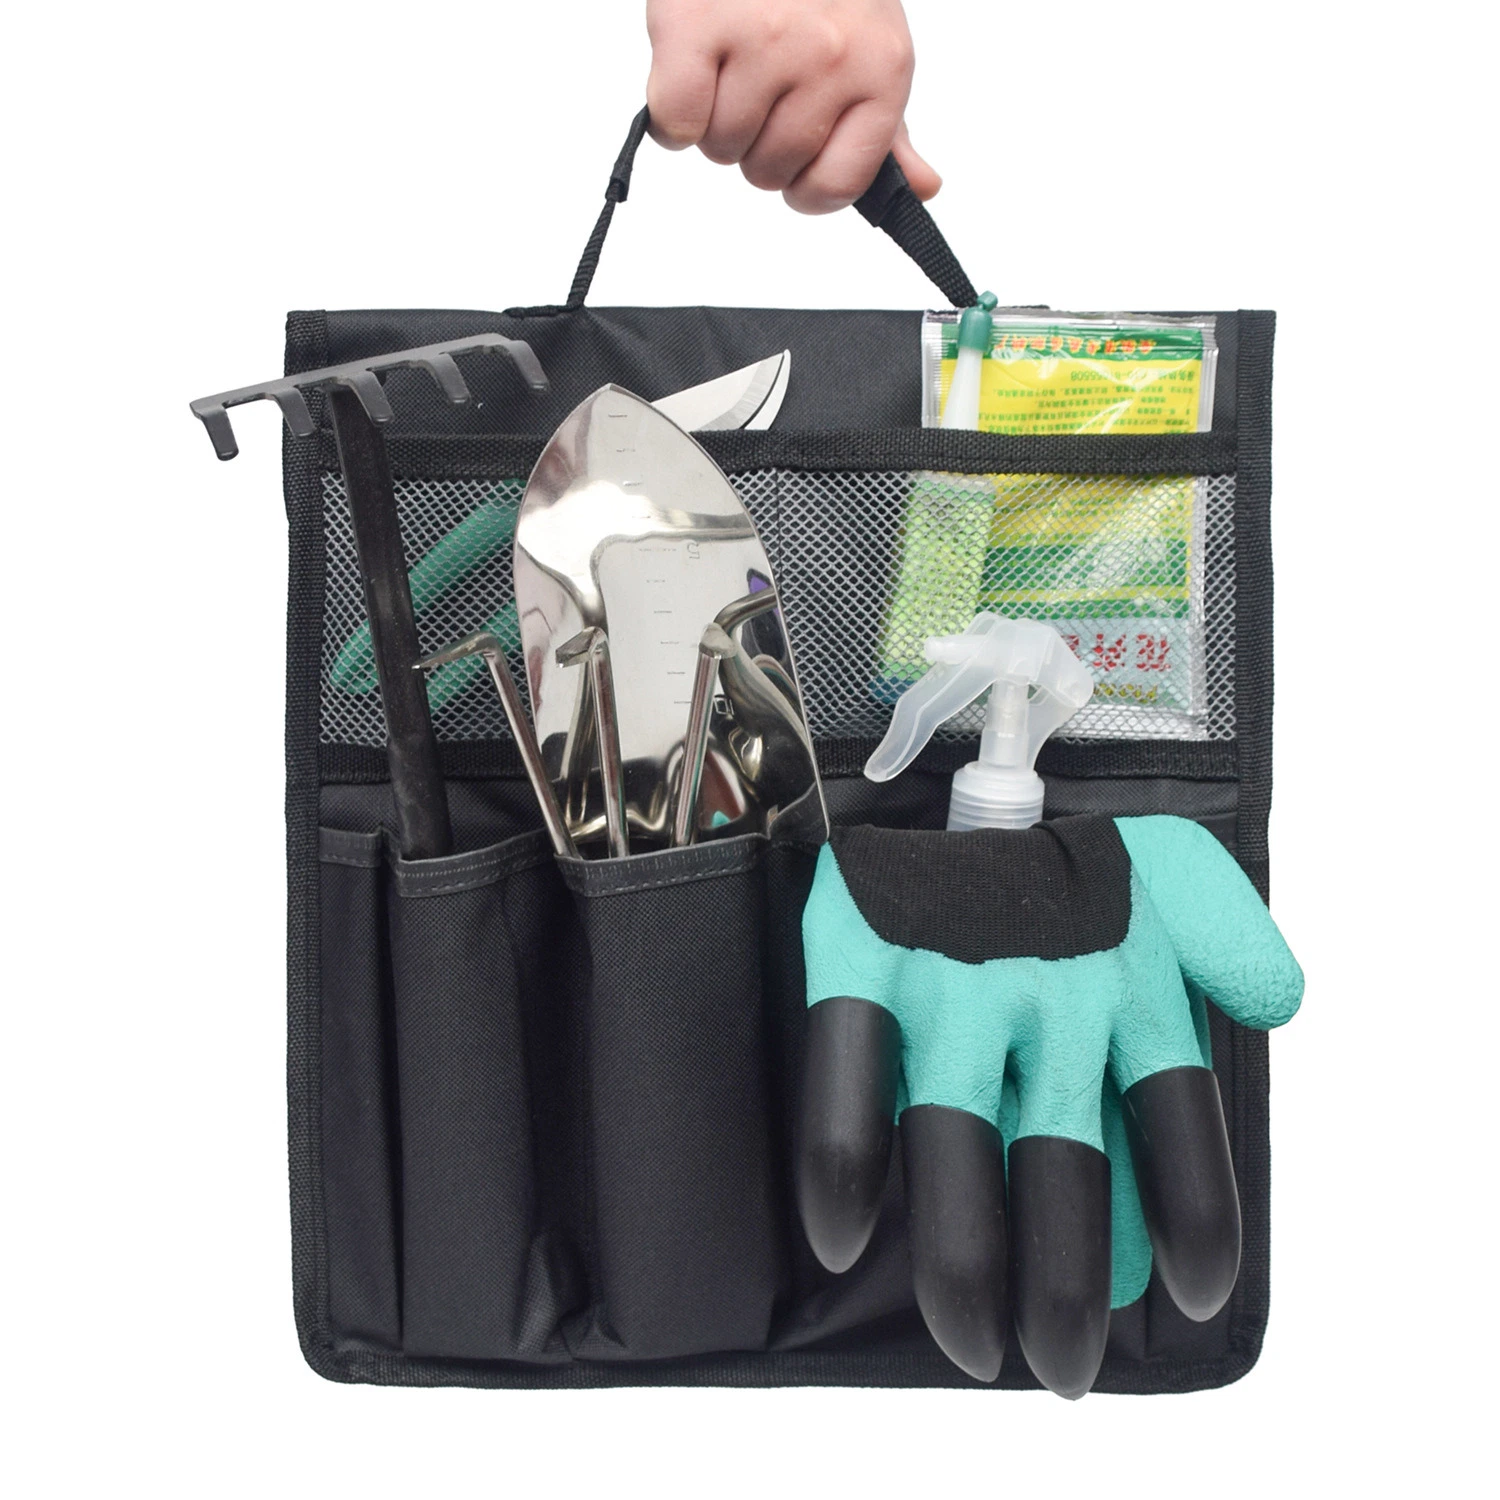 Garden Tote Storage Bag with Pockets, Garden Tool Kit Organizer Bag Bl18385